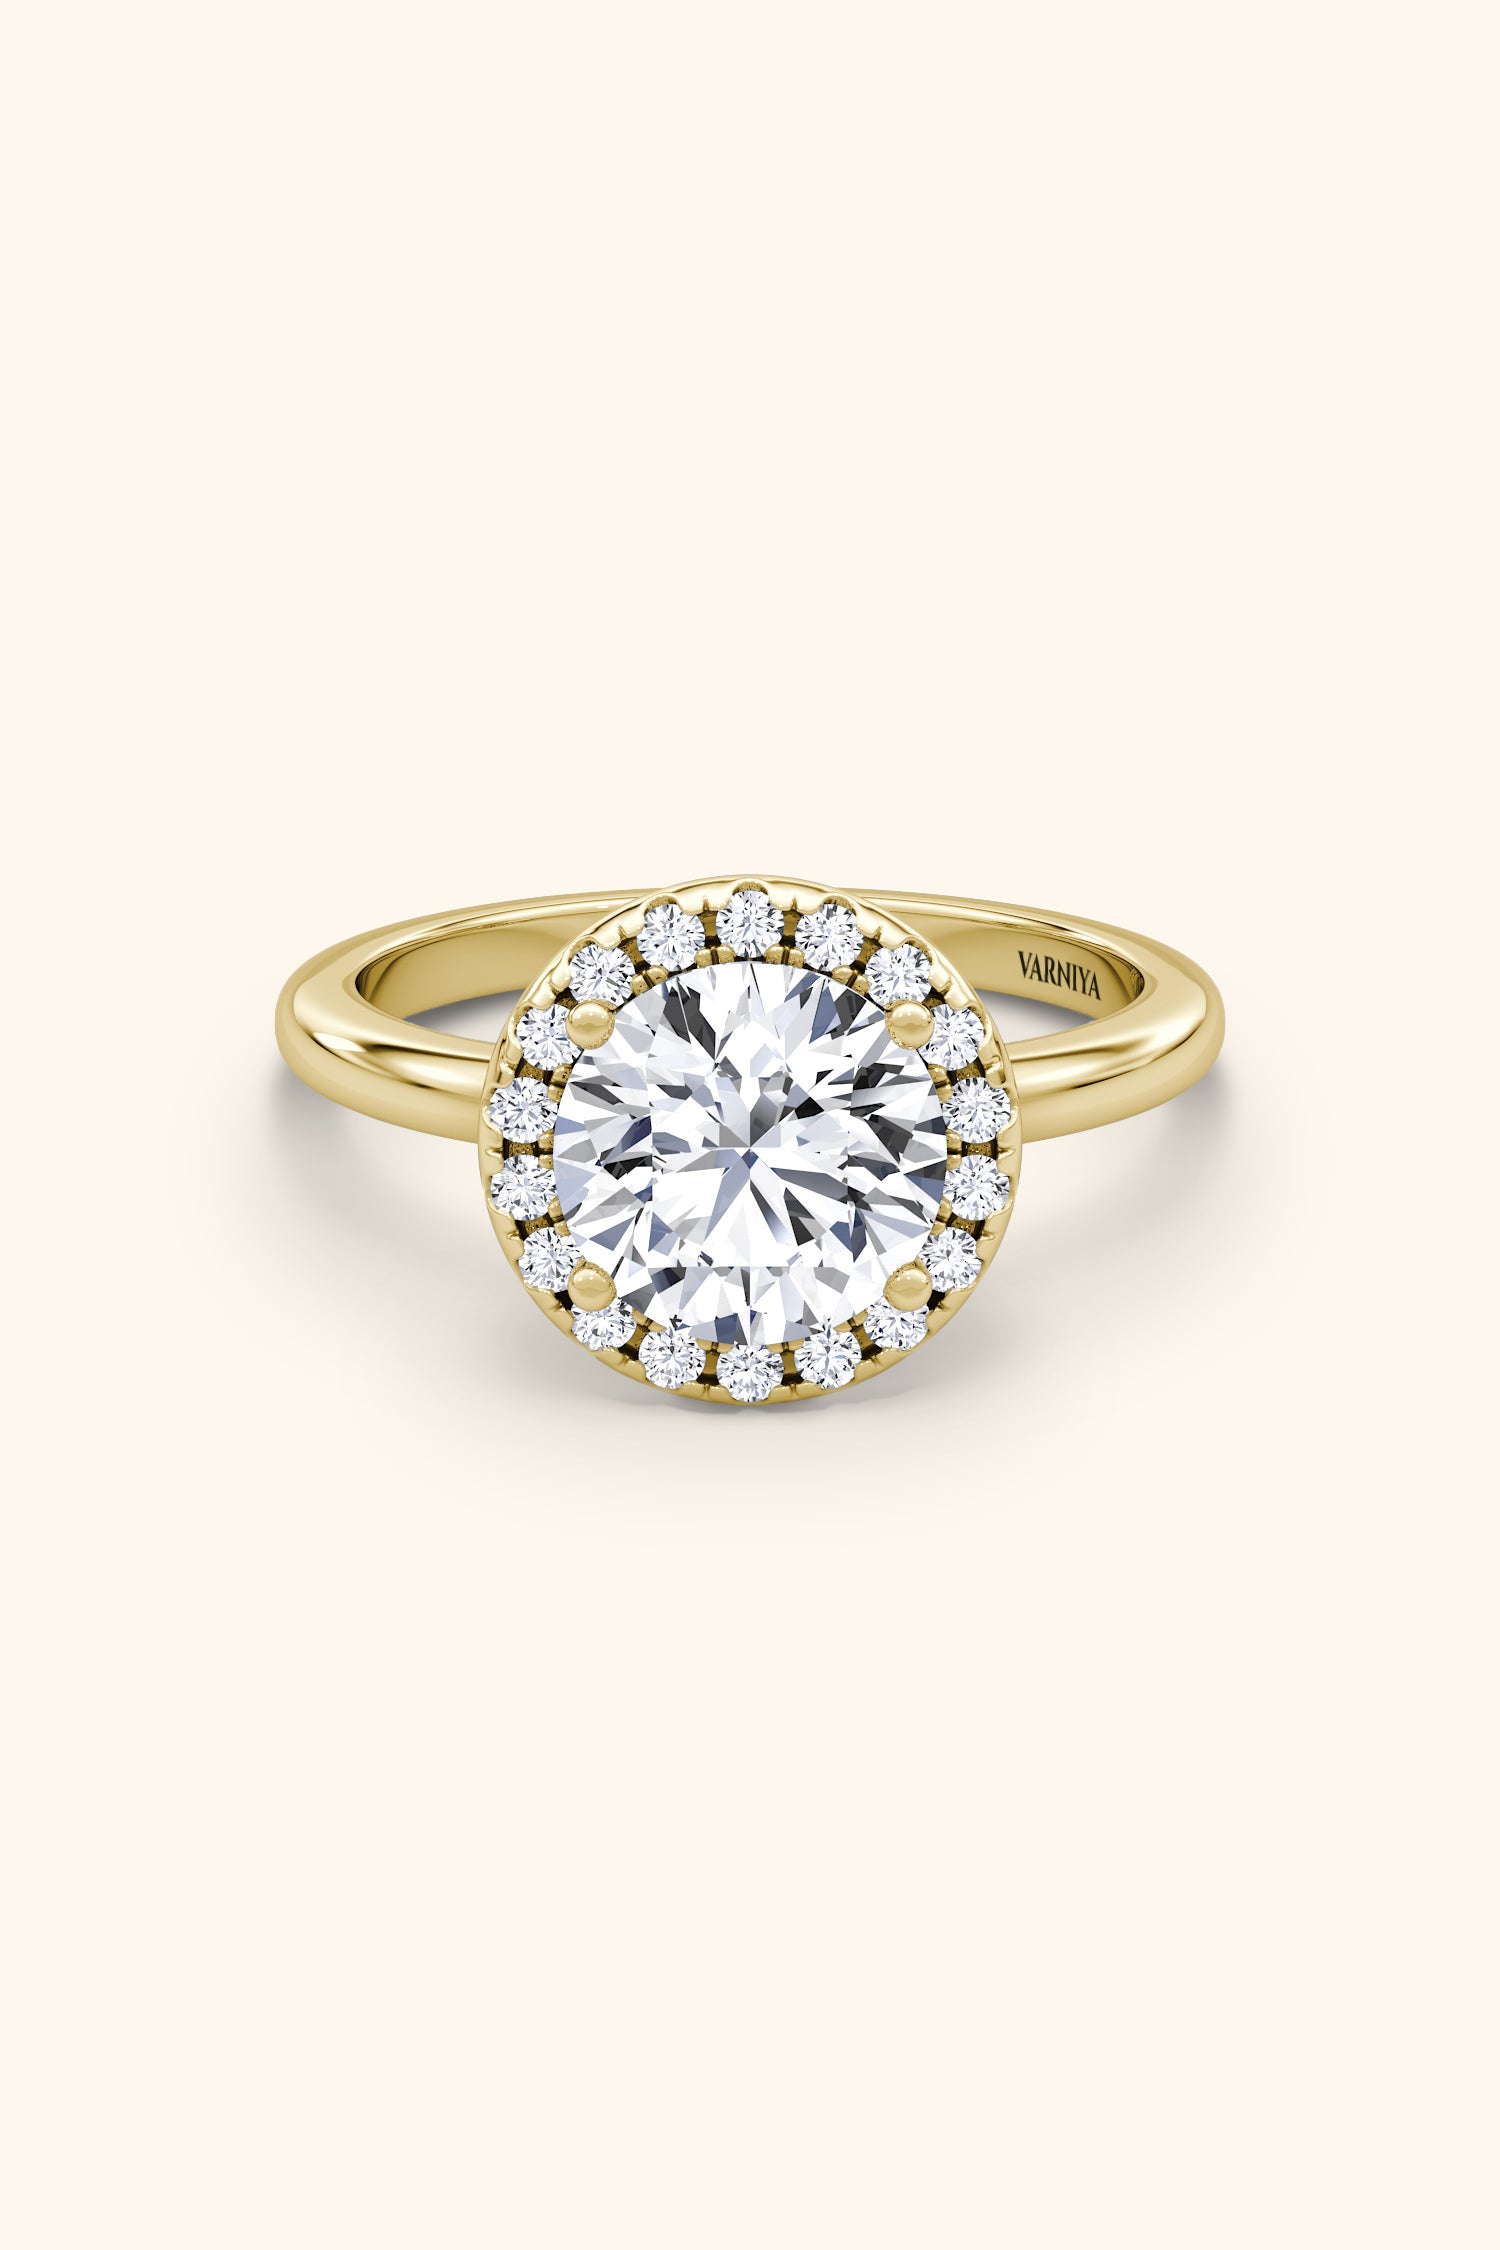 1.4 Carat 14K White Gold Twisting Infinity Gold Diamond Engagement Ring w/  1 Carat blue sapphire | Amazon.com